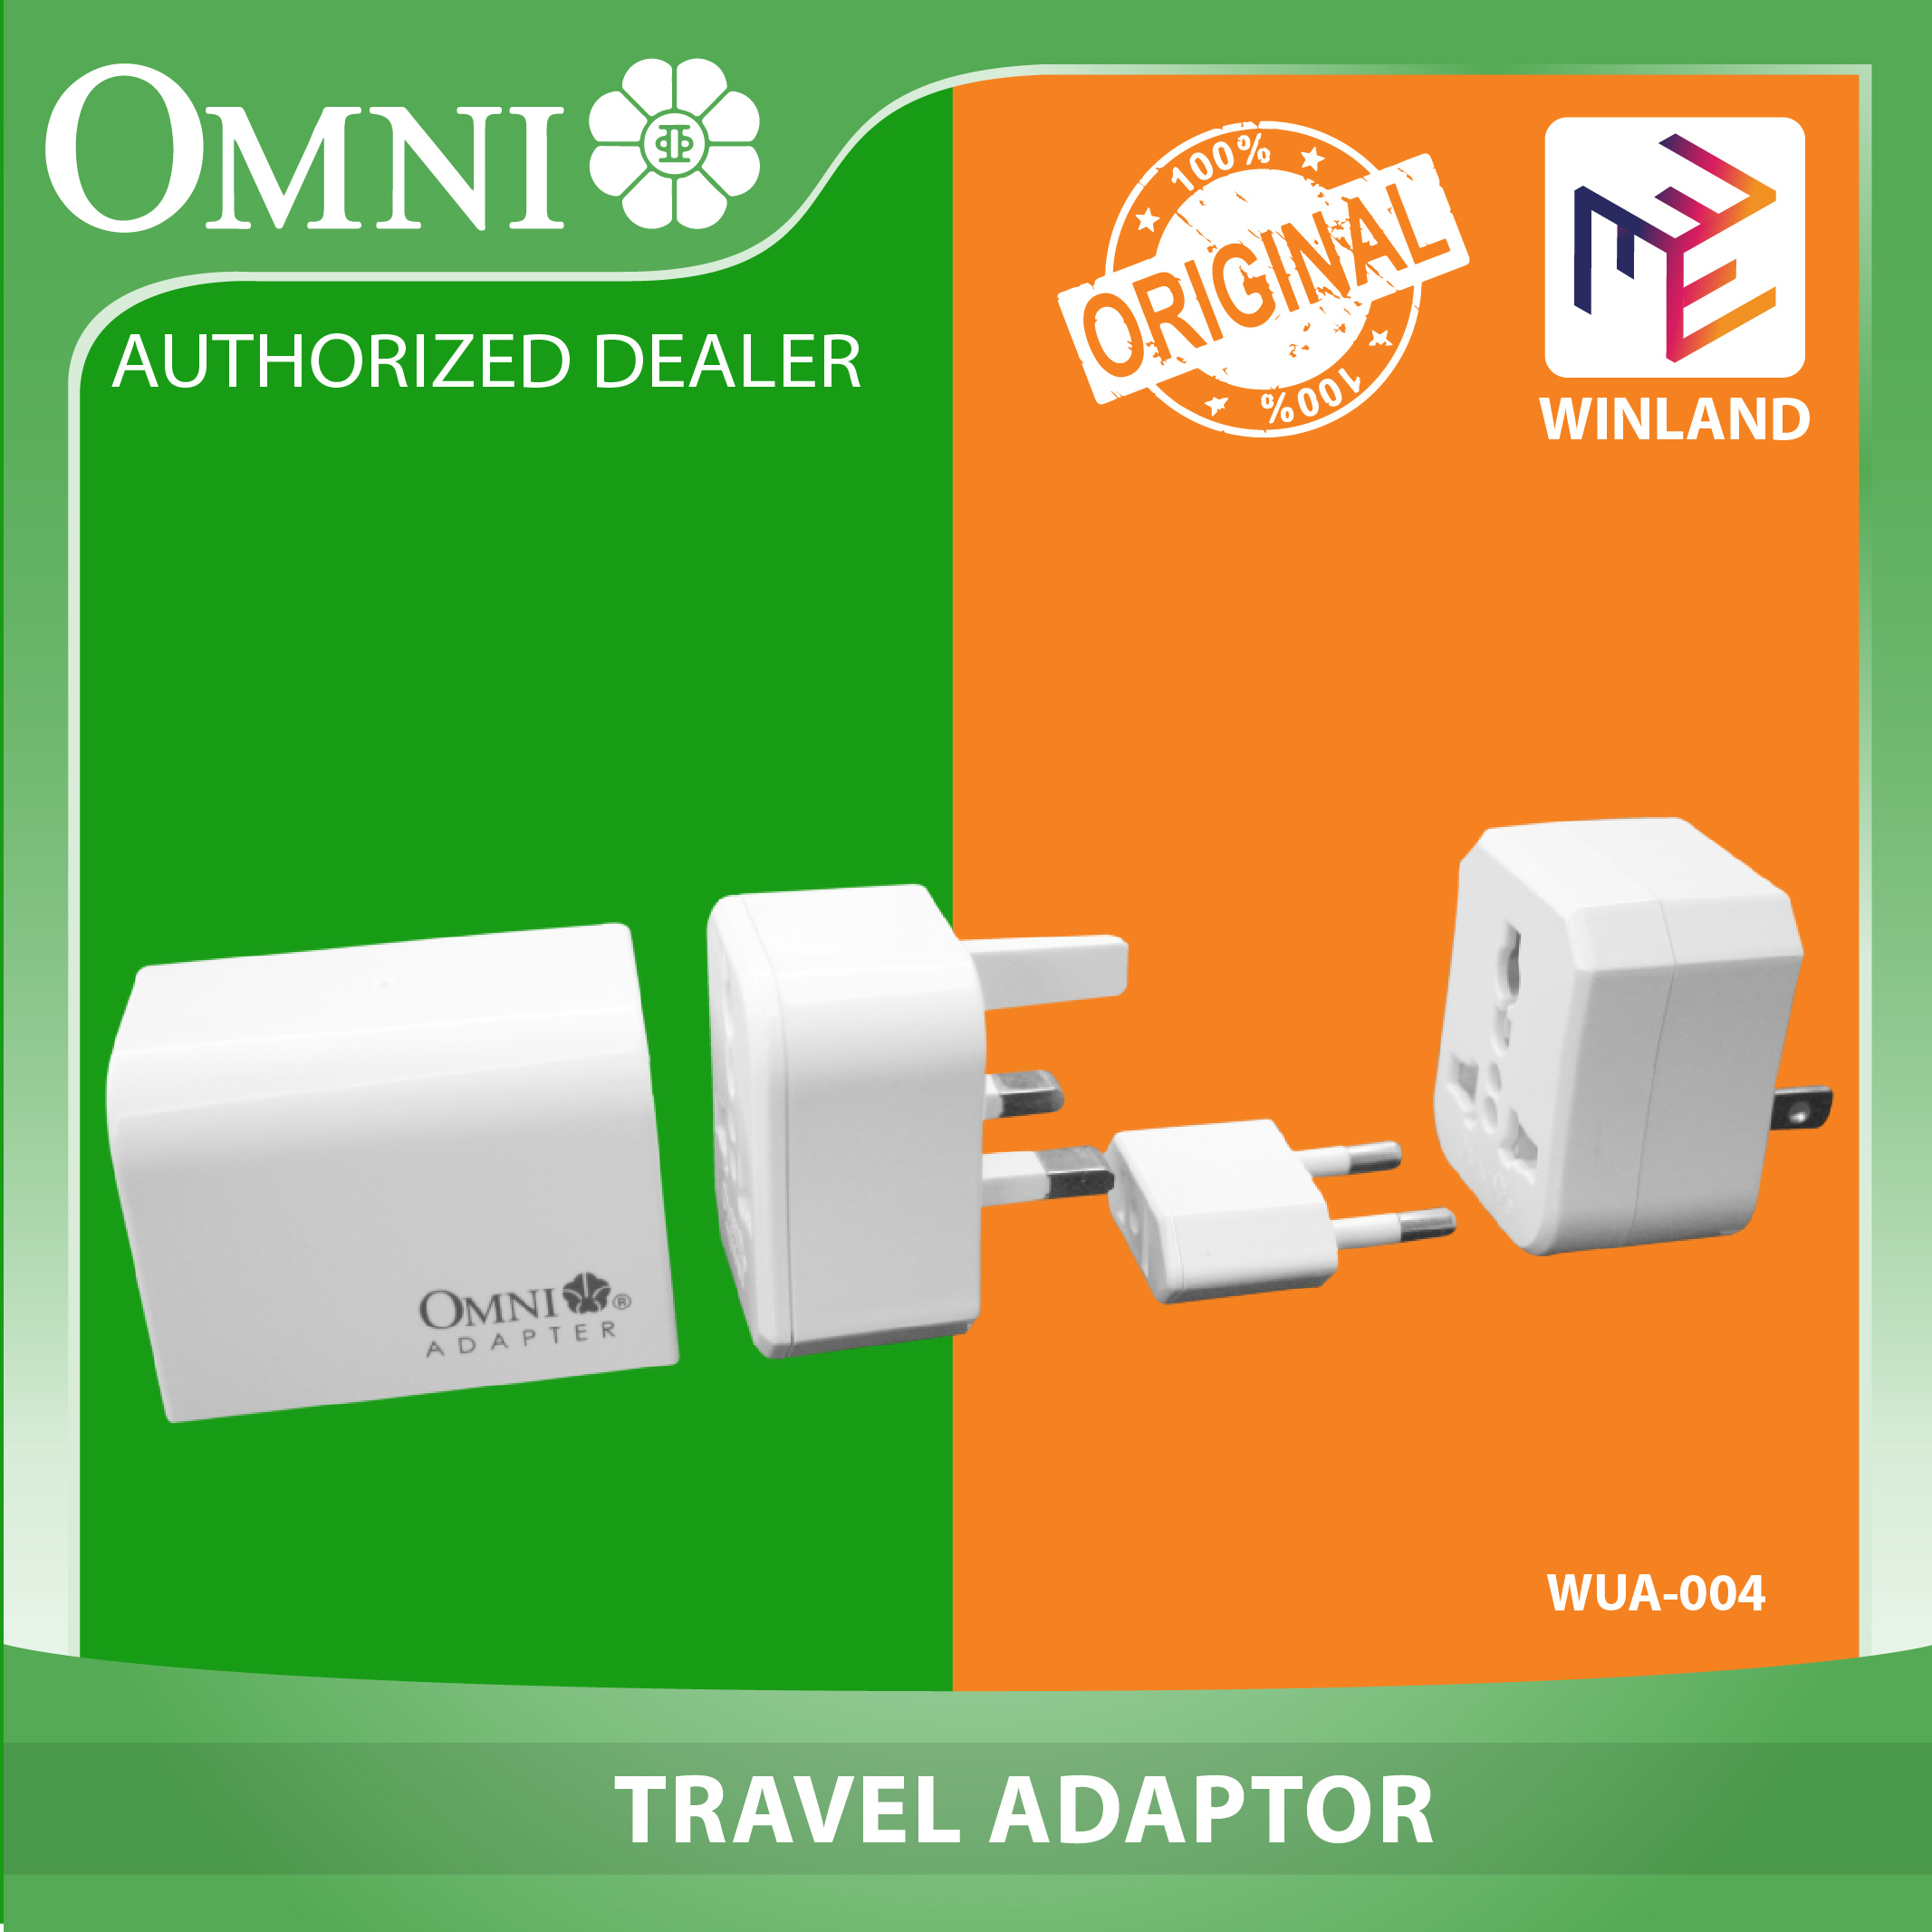 omni nano universal travel adapter